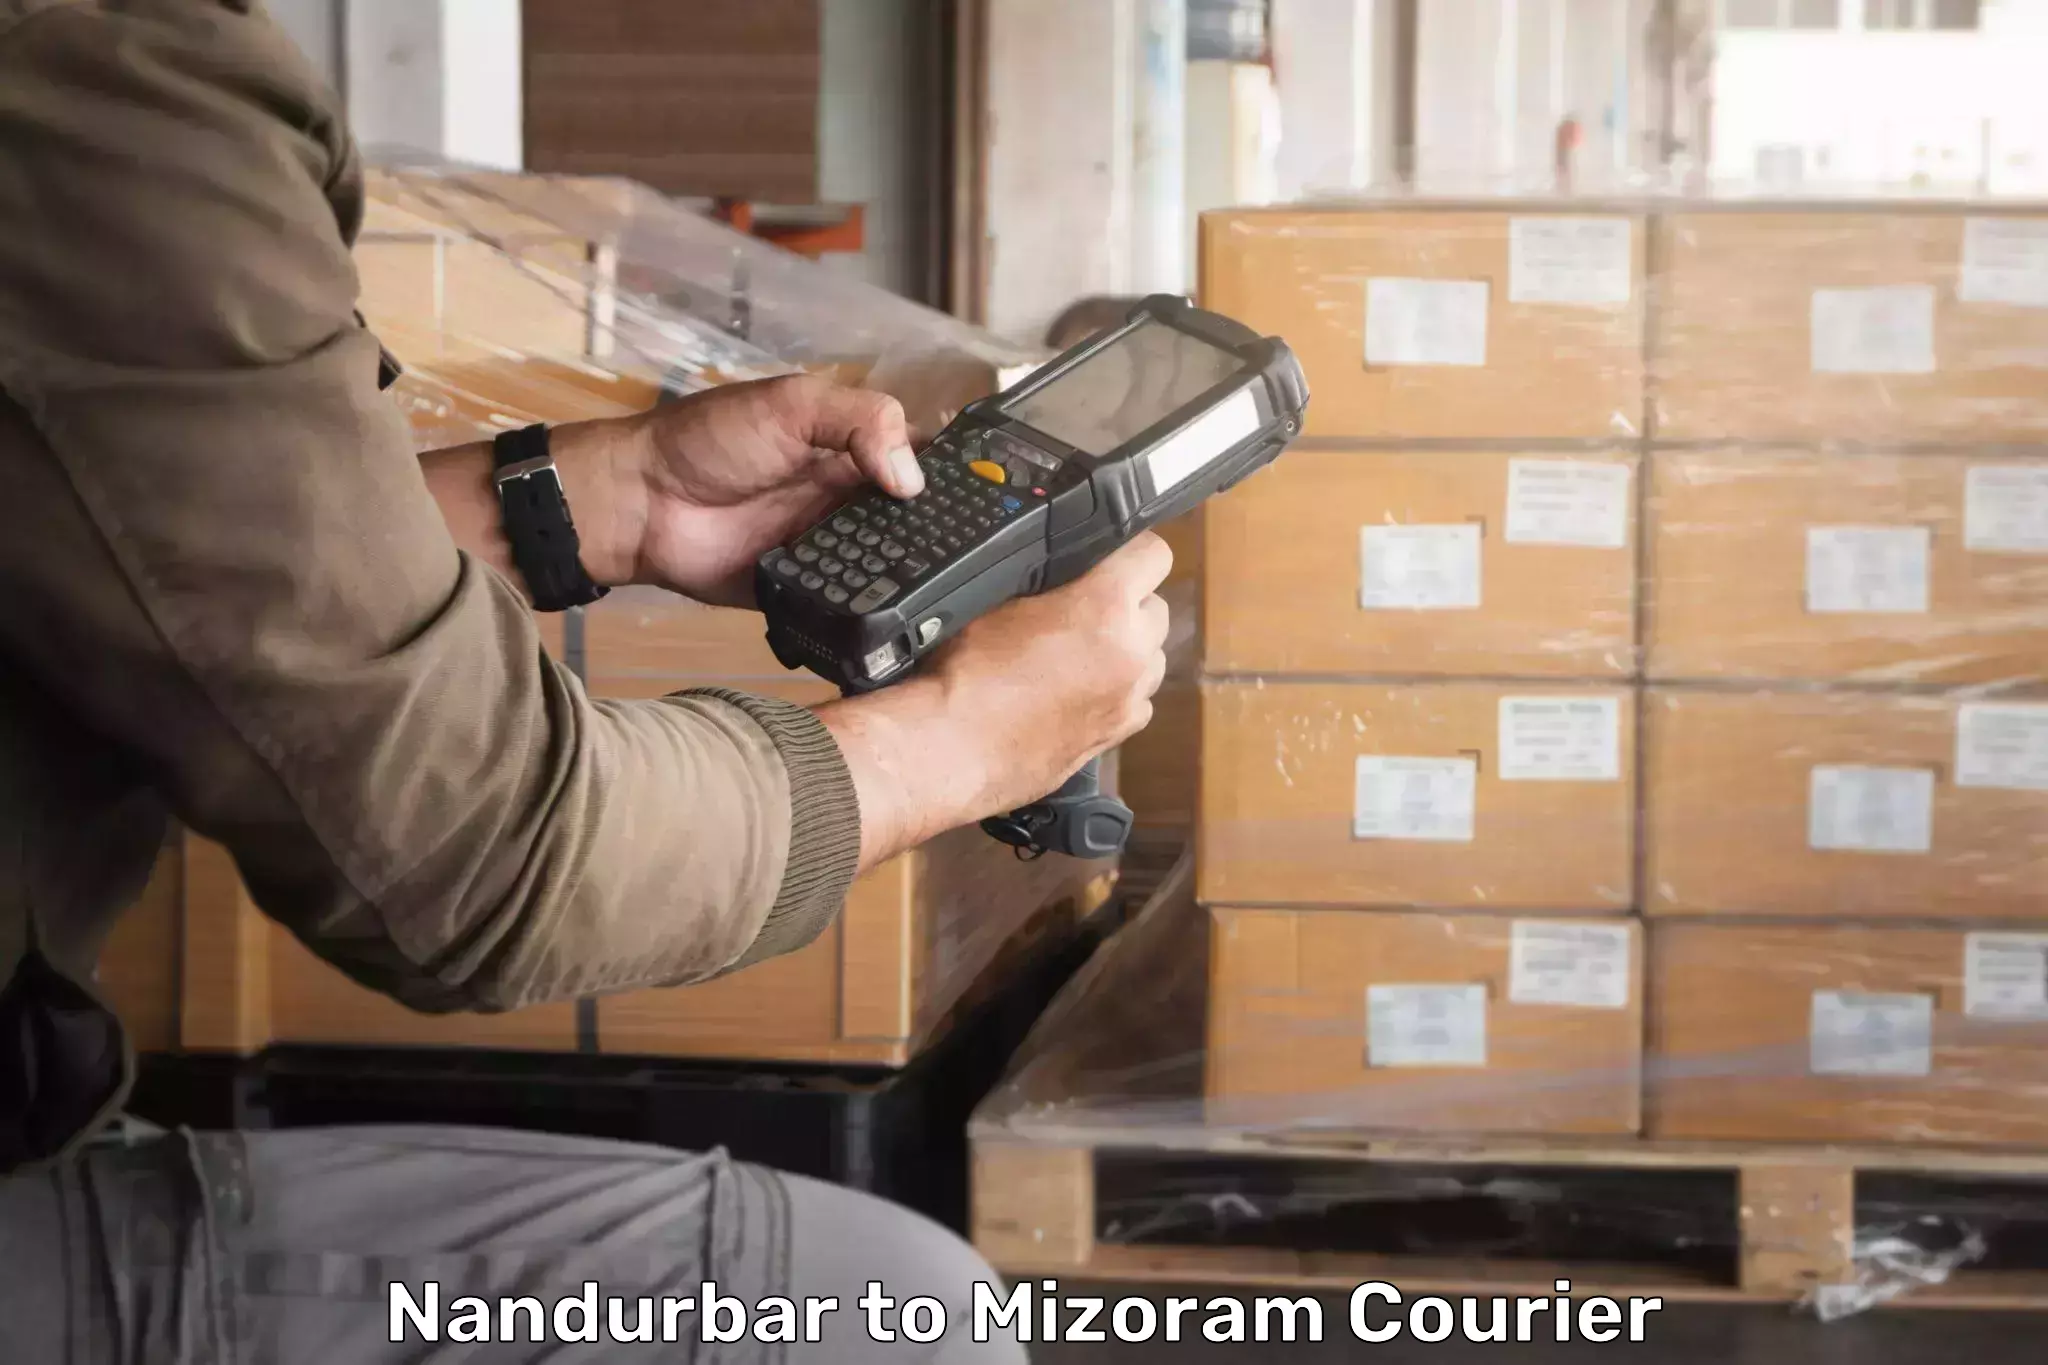 Express courier capabilities Nandurbar to Mizoram